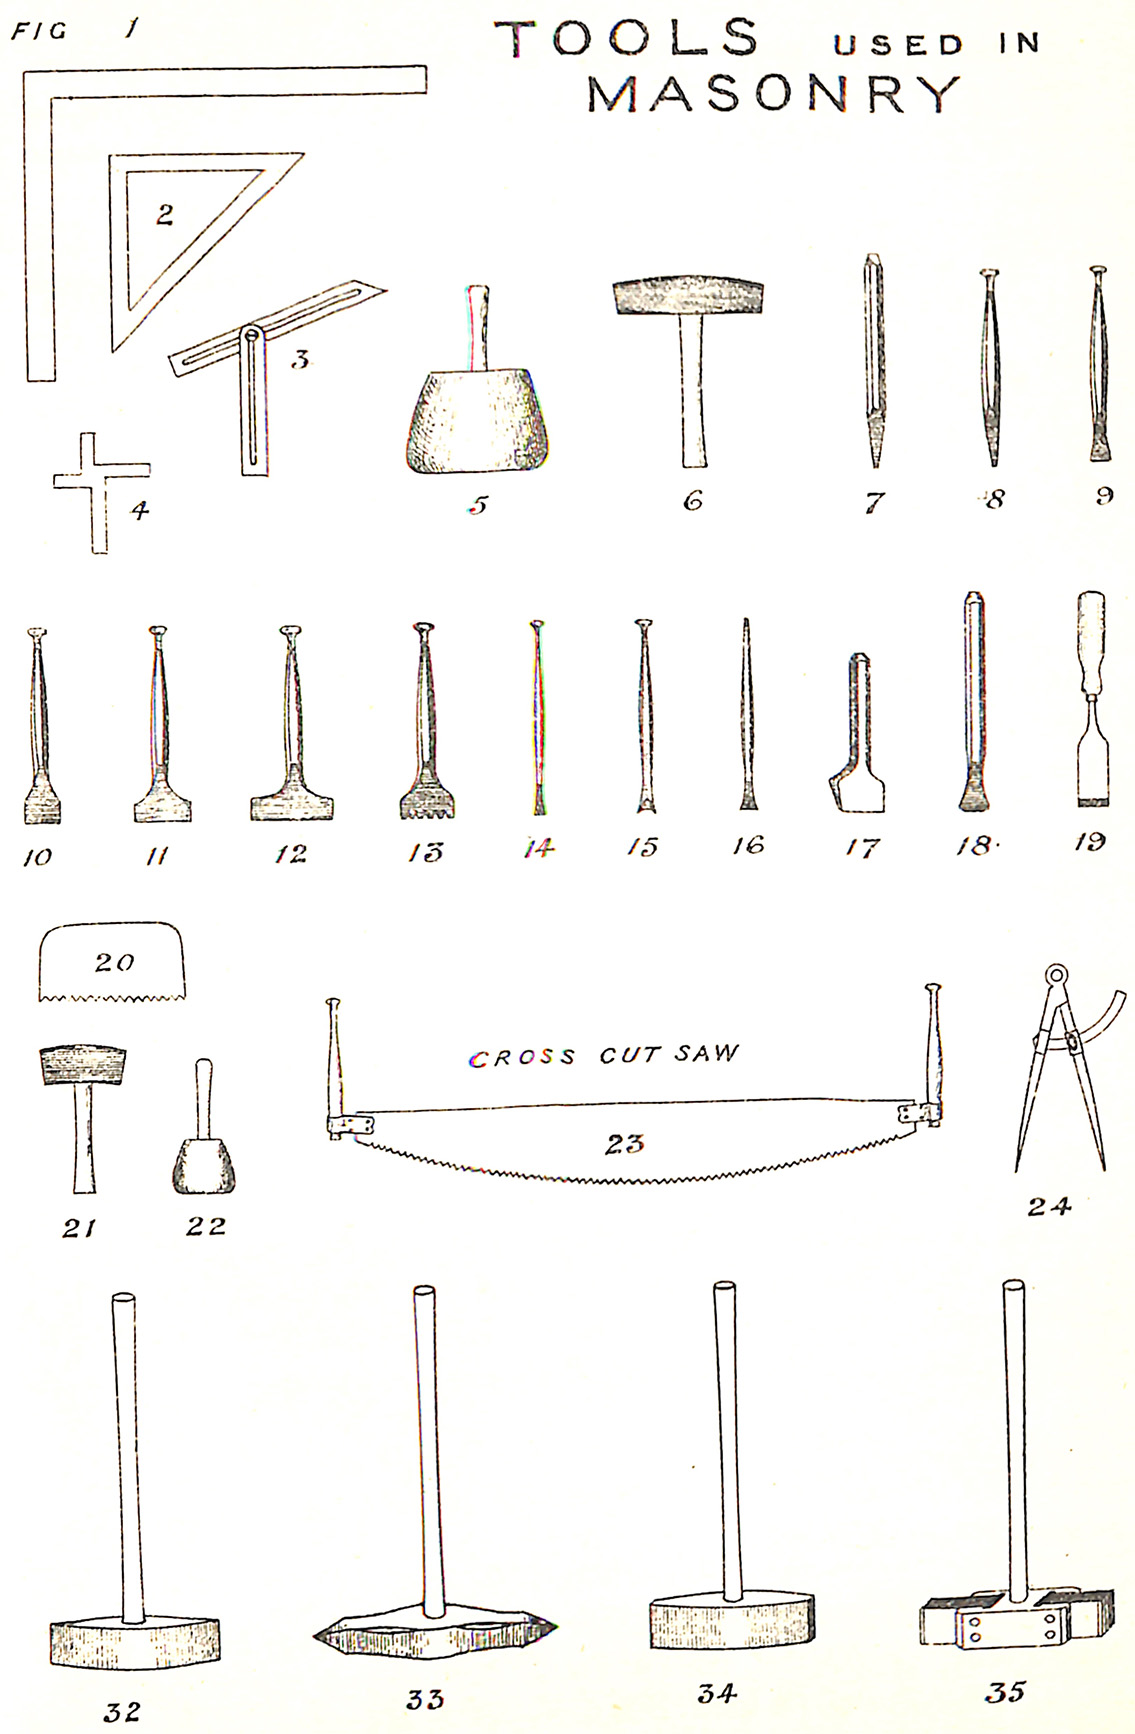 Tools used in Masonry